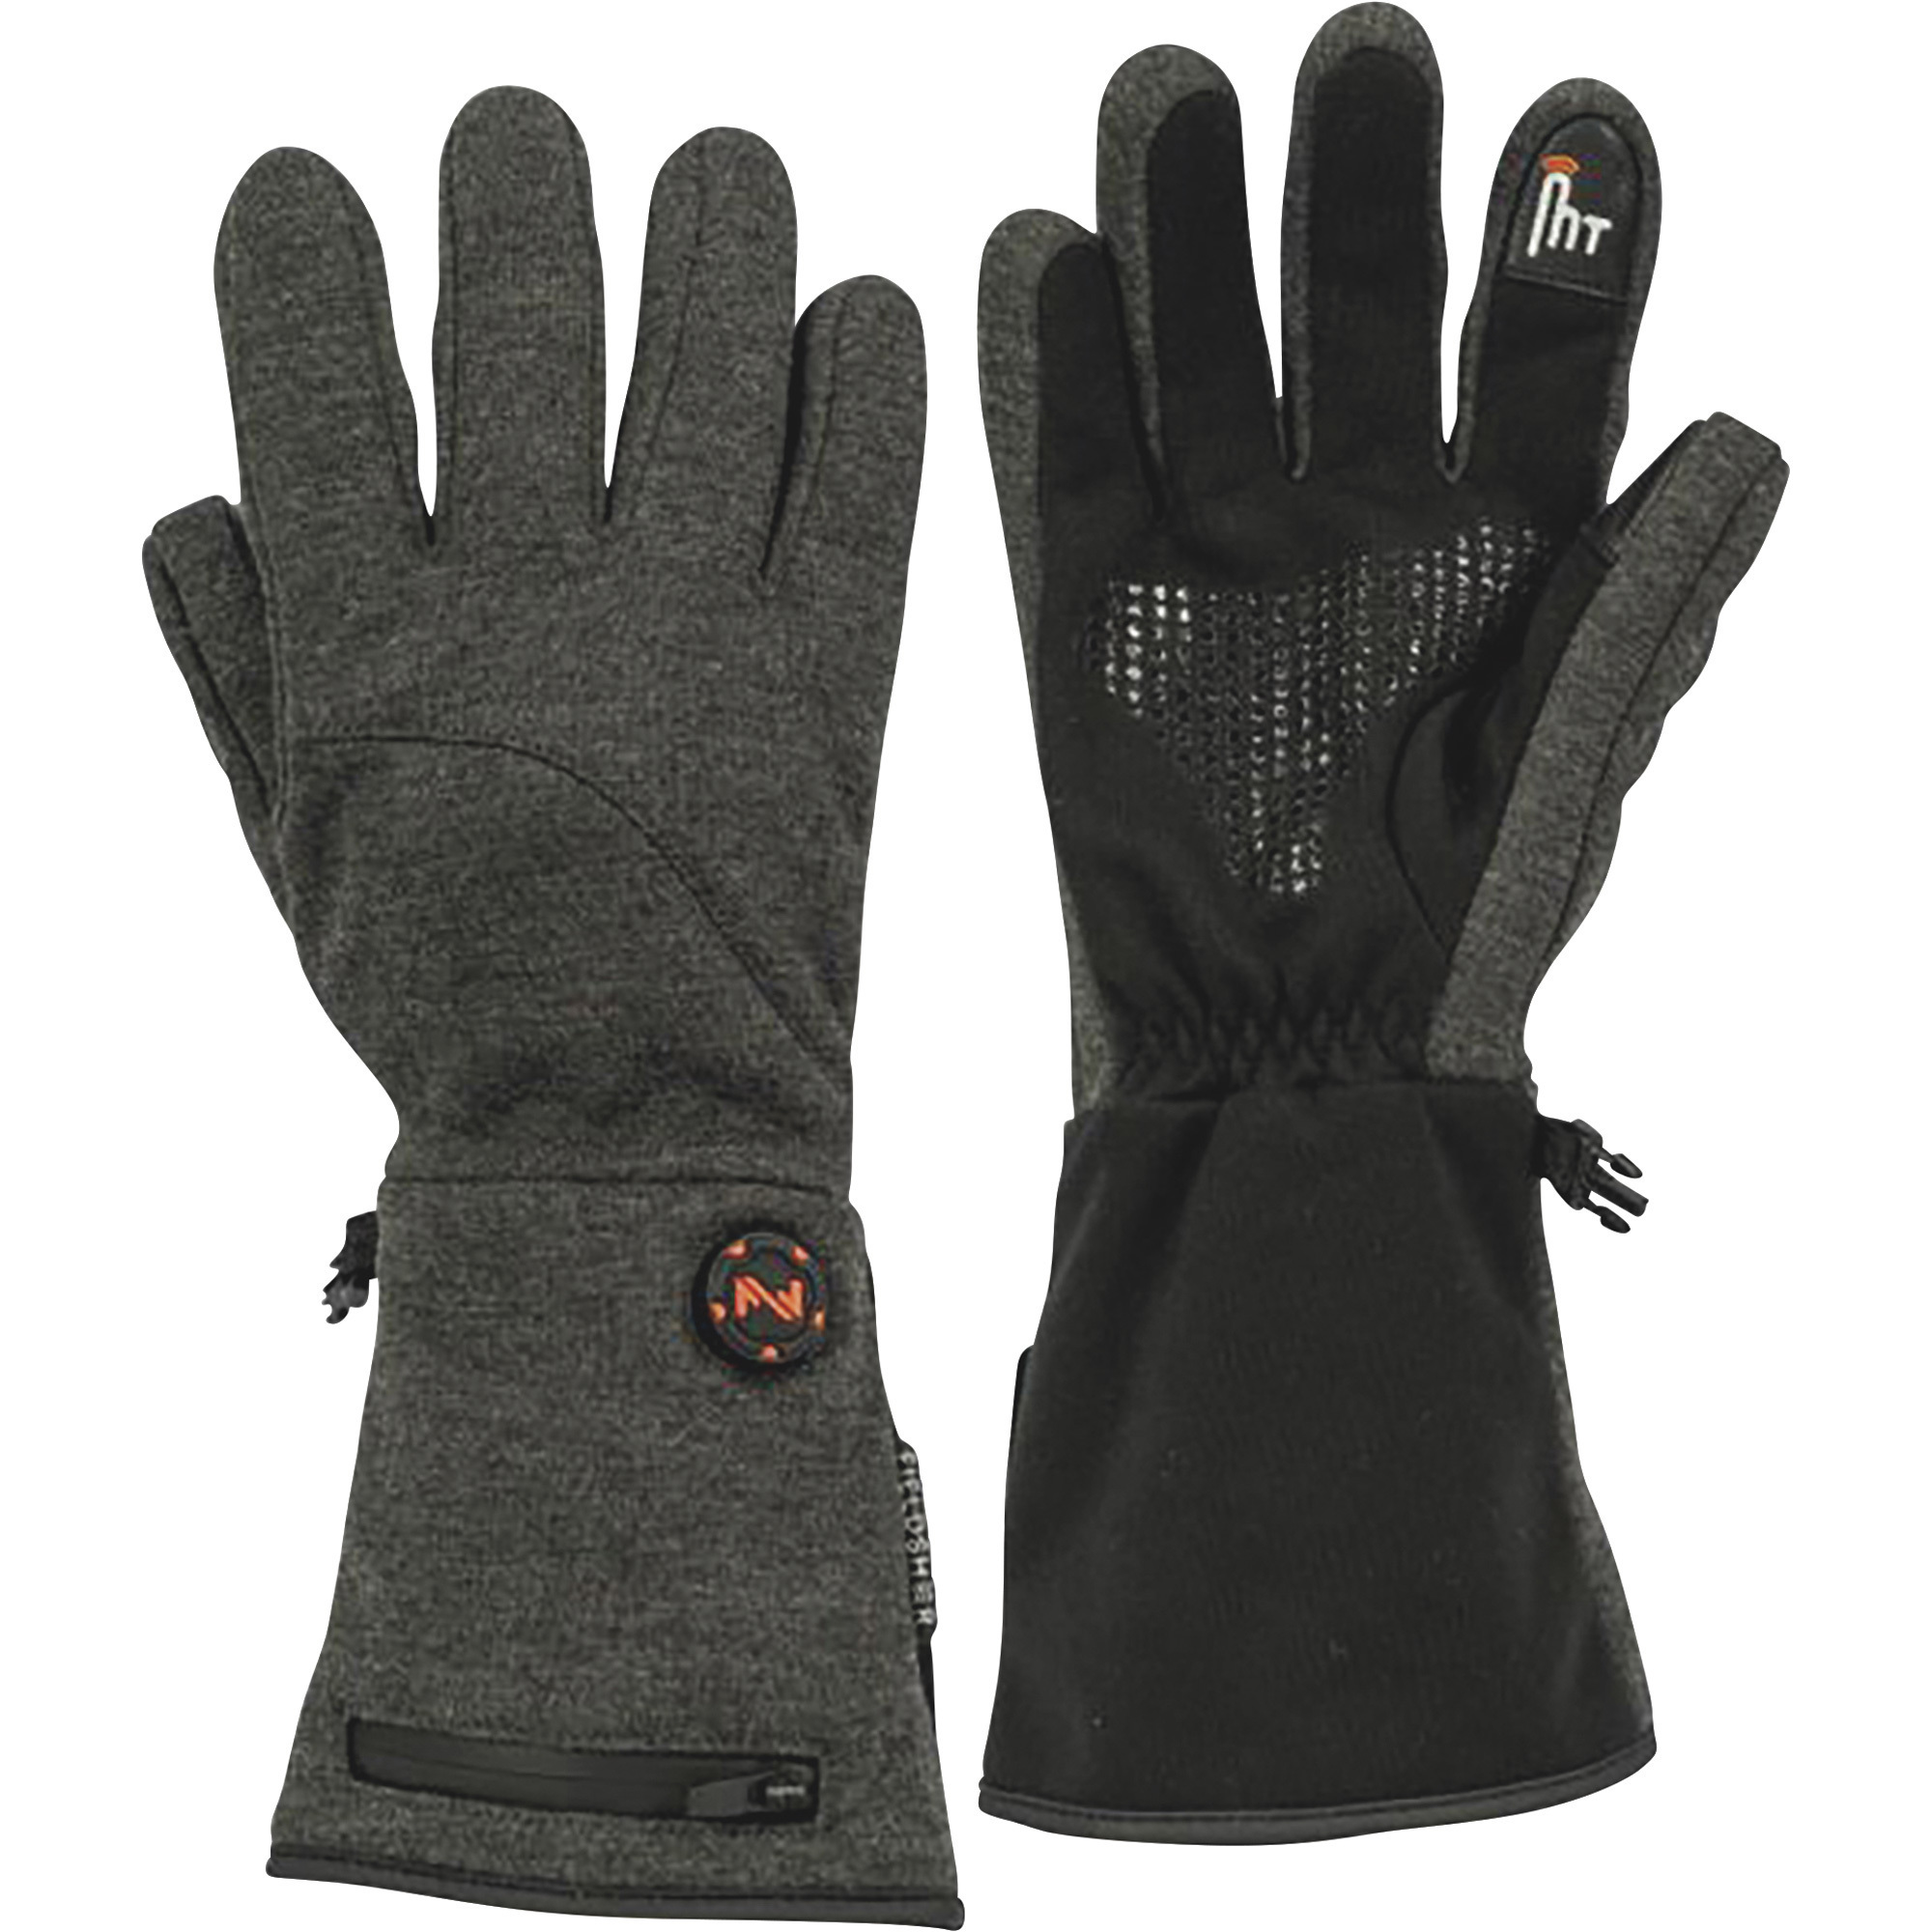 Fieldsheer Heated Thermal Gloves, Black, Large, Model MWUG20010421